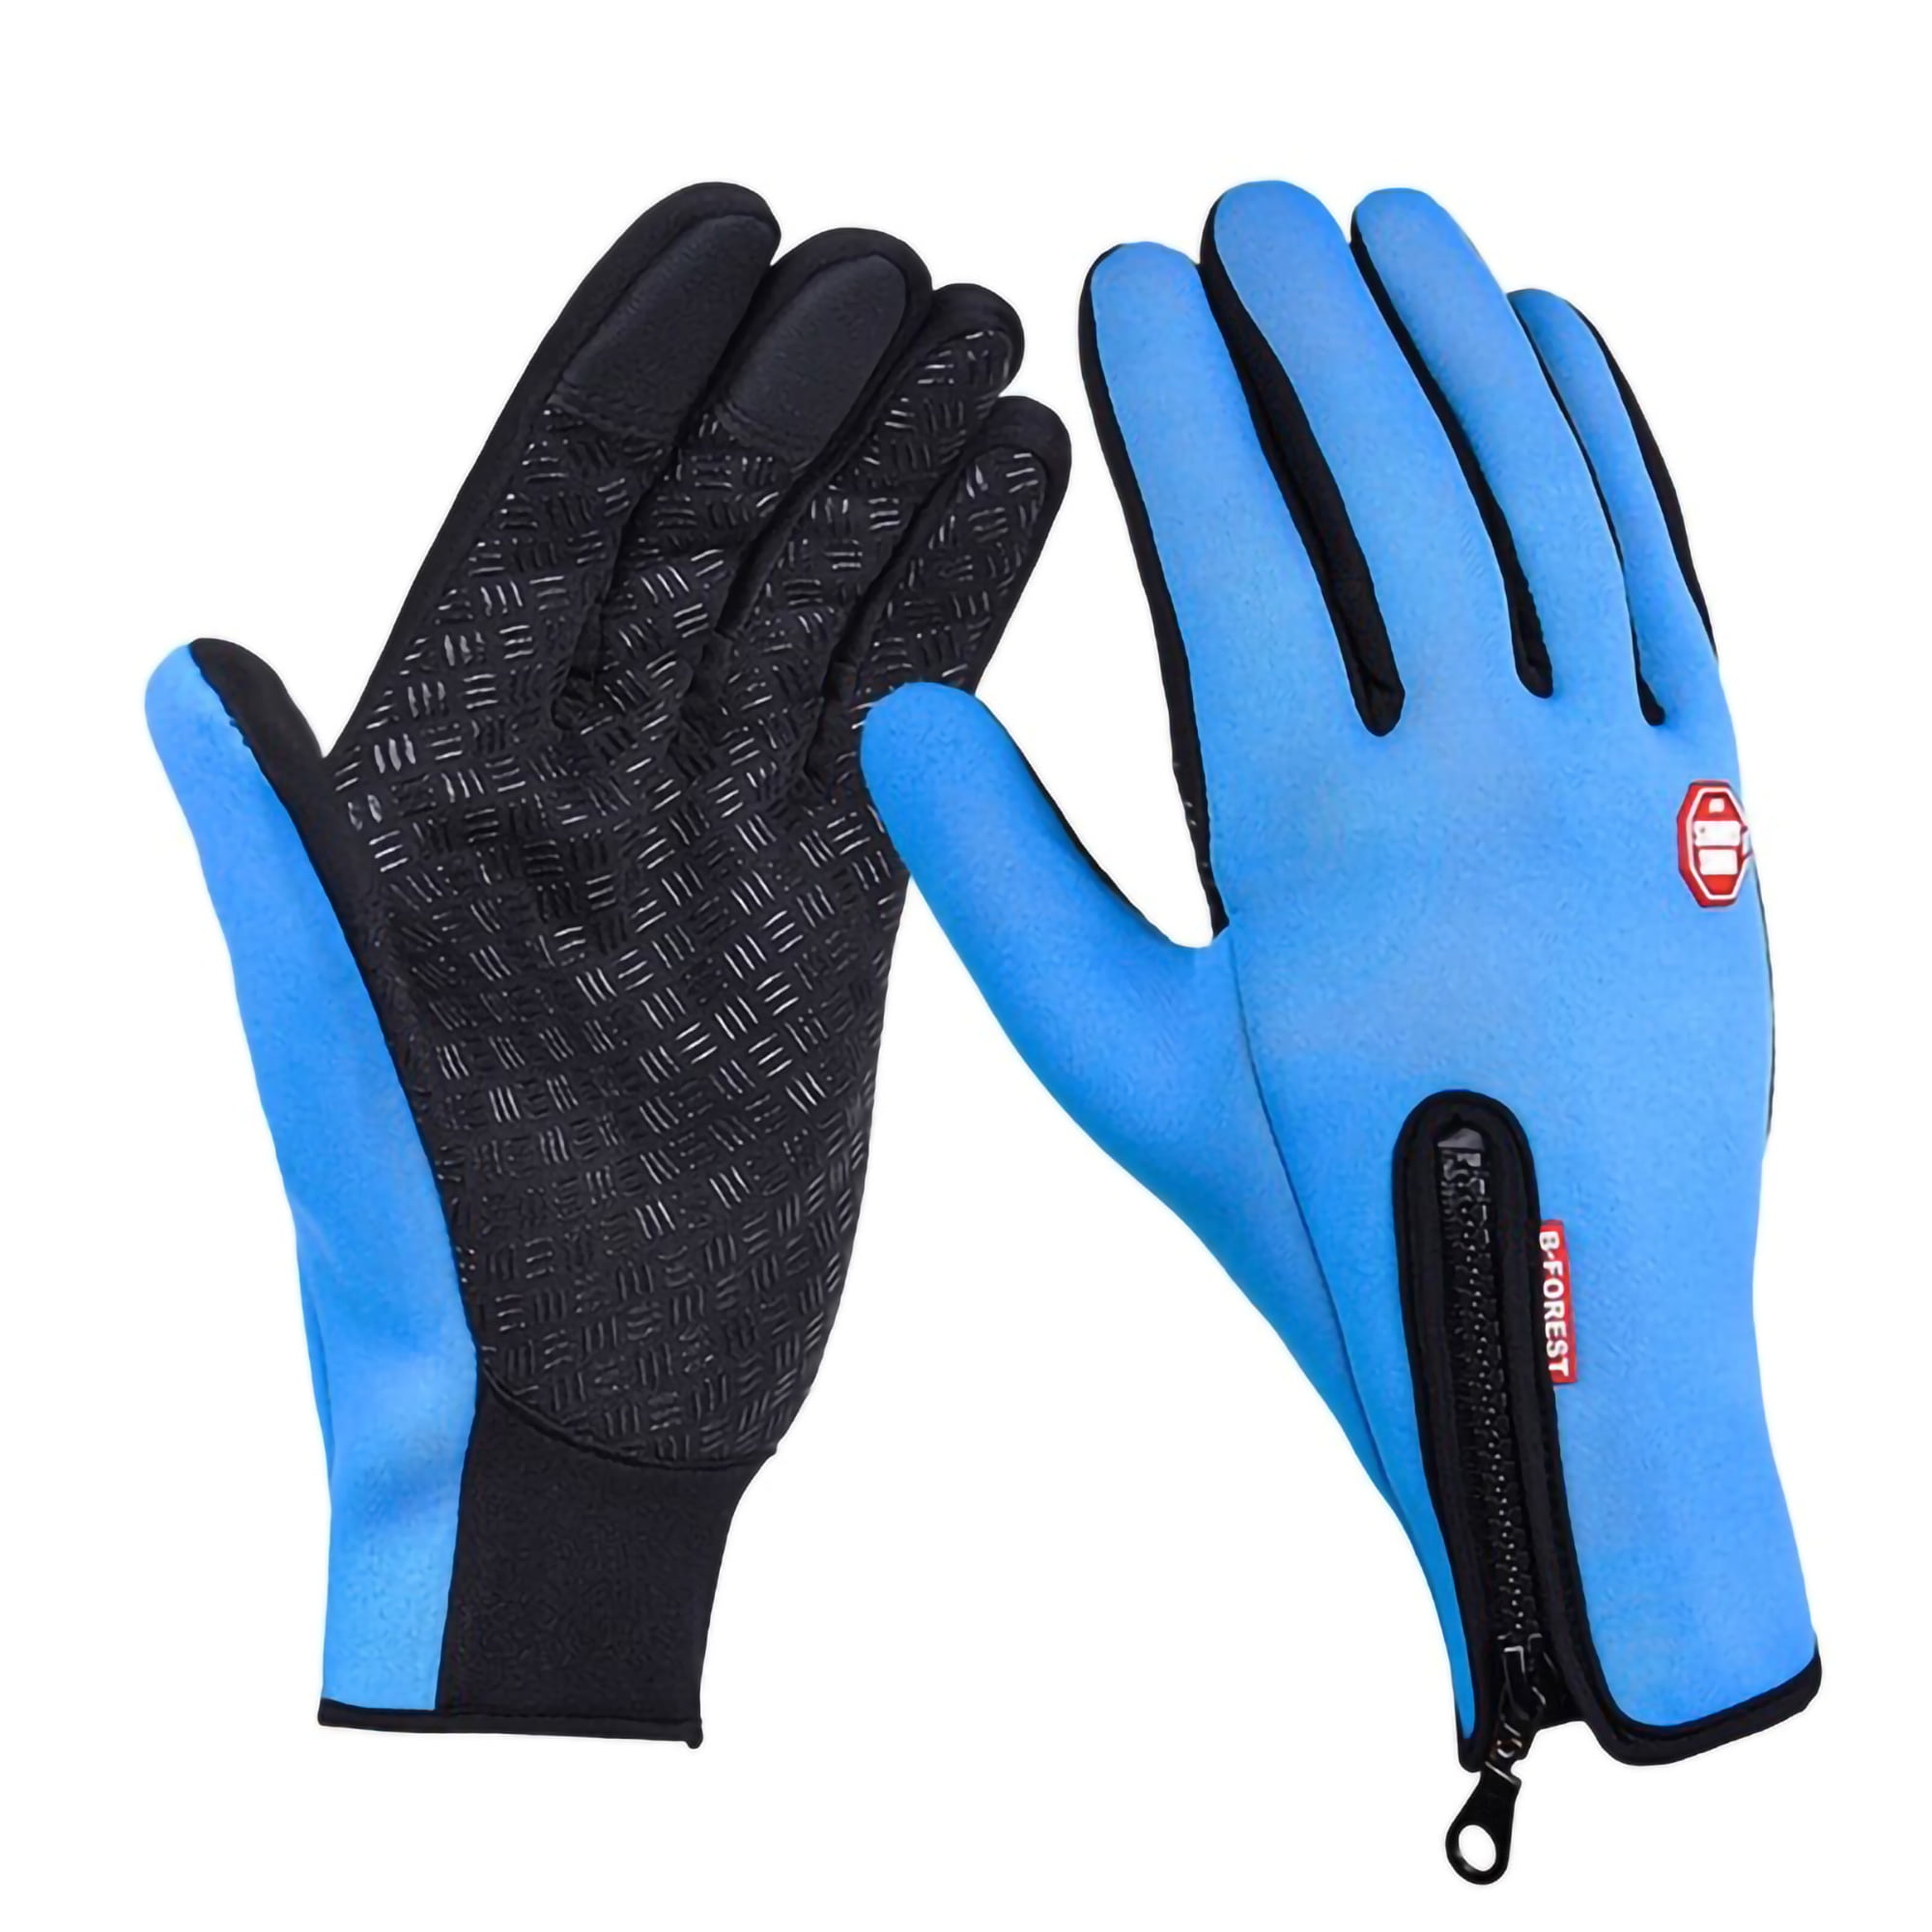 Cycling Winter Gloves Waterproof Touch Screen Full Finger Liner Men Women Sports